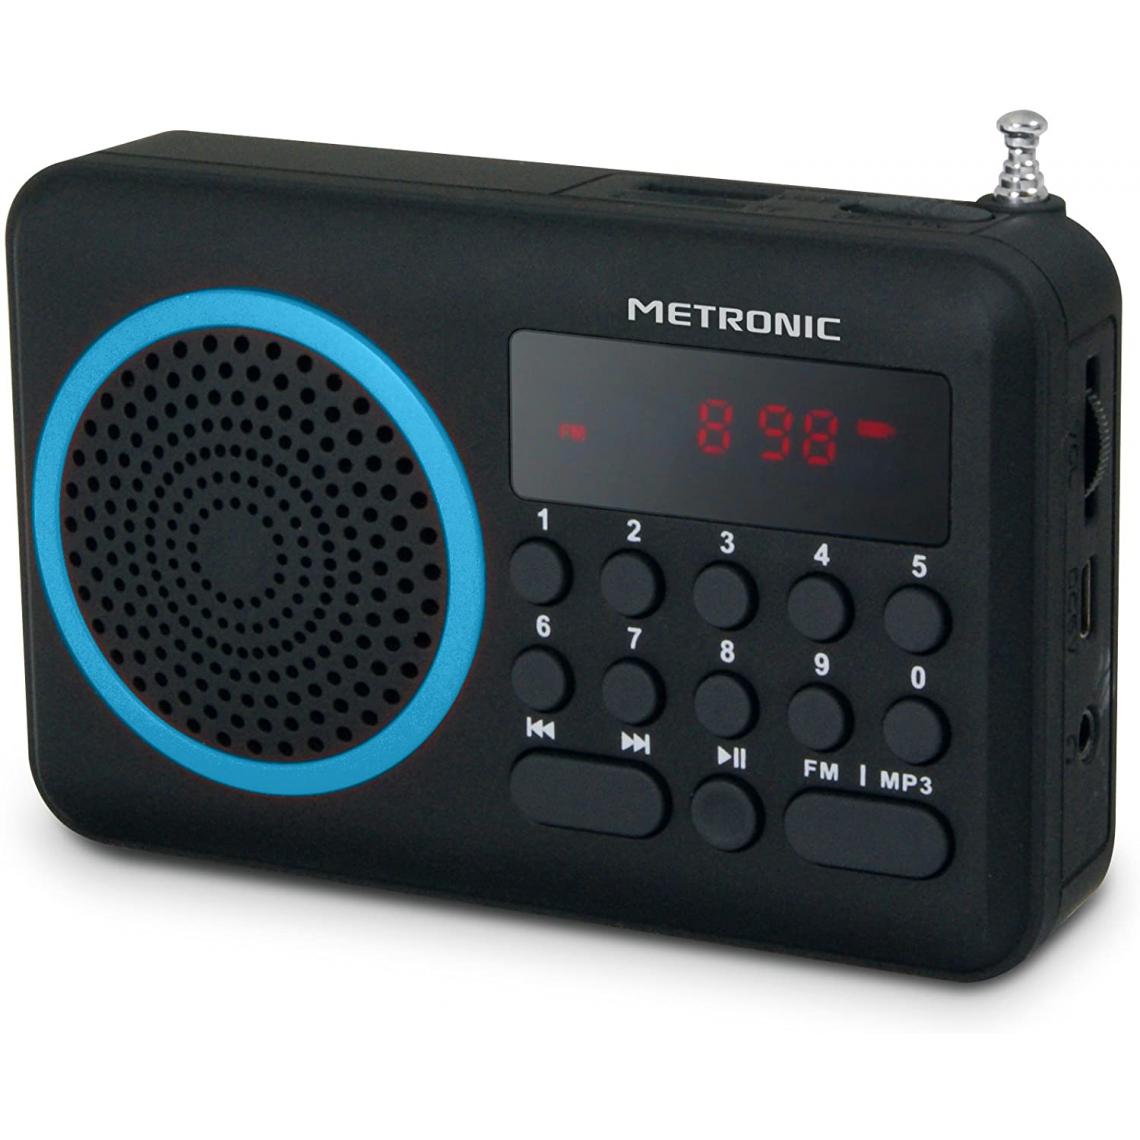 Metronic - radio Portable FM Compact USB SD bleu noir - Radio